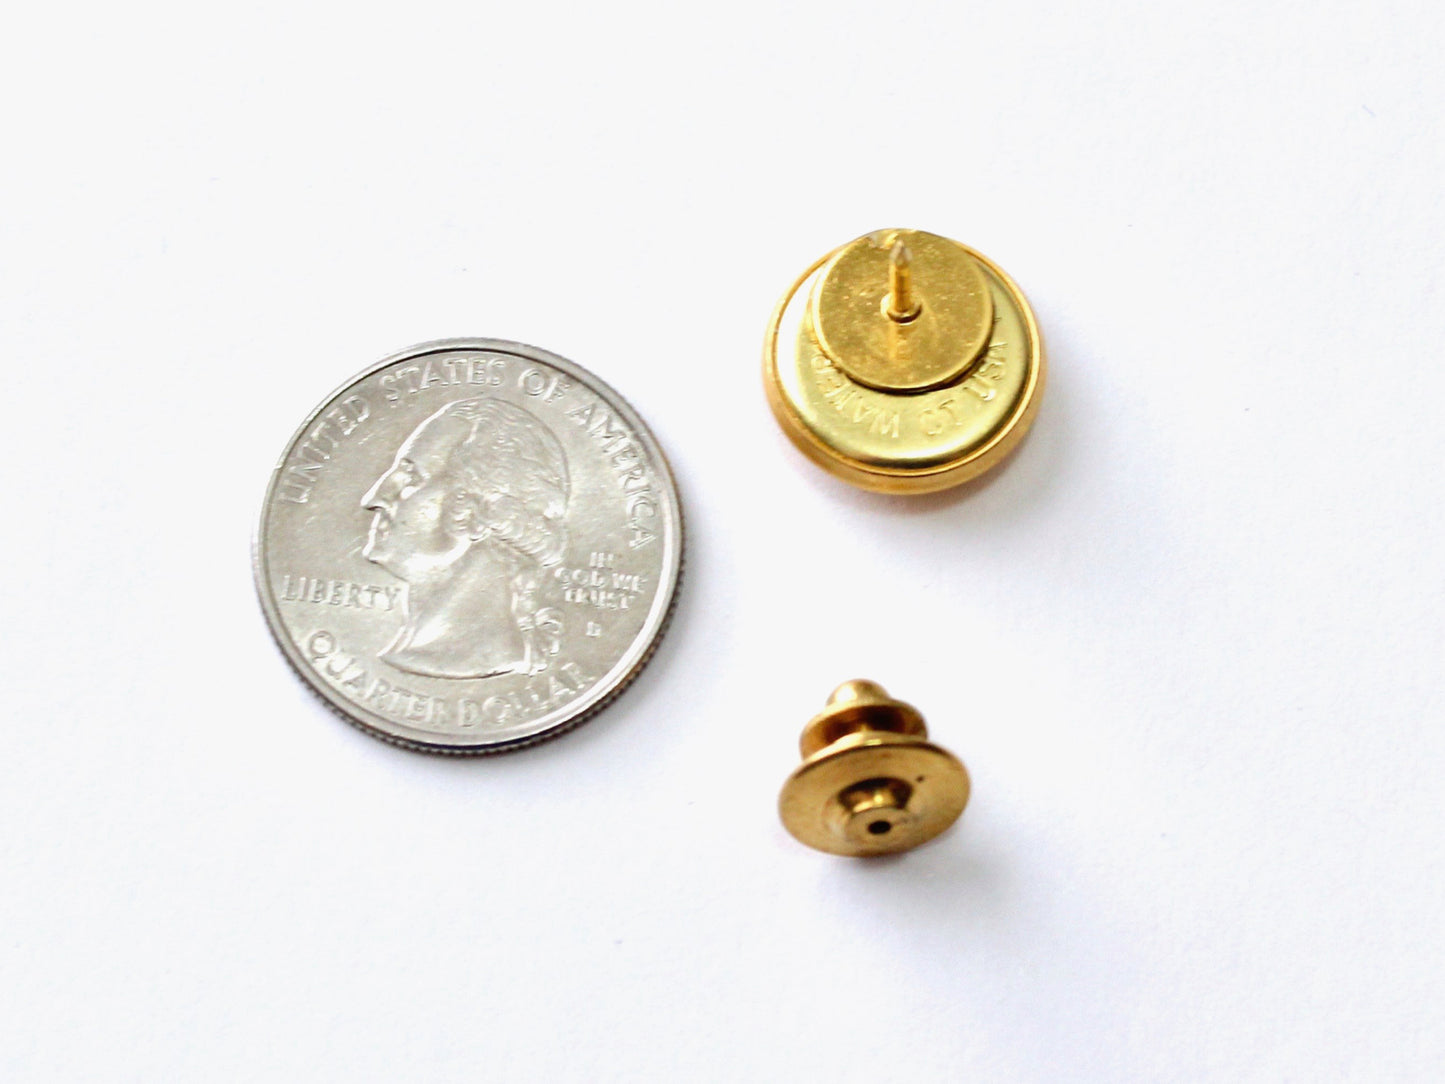 US Navy Button Lapel Pin